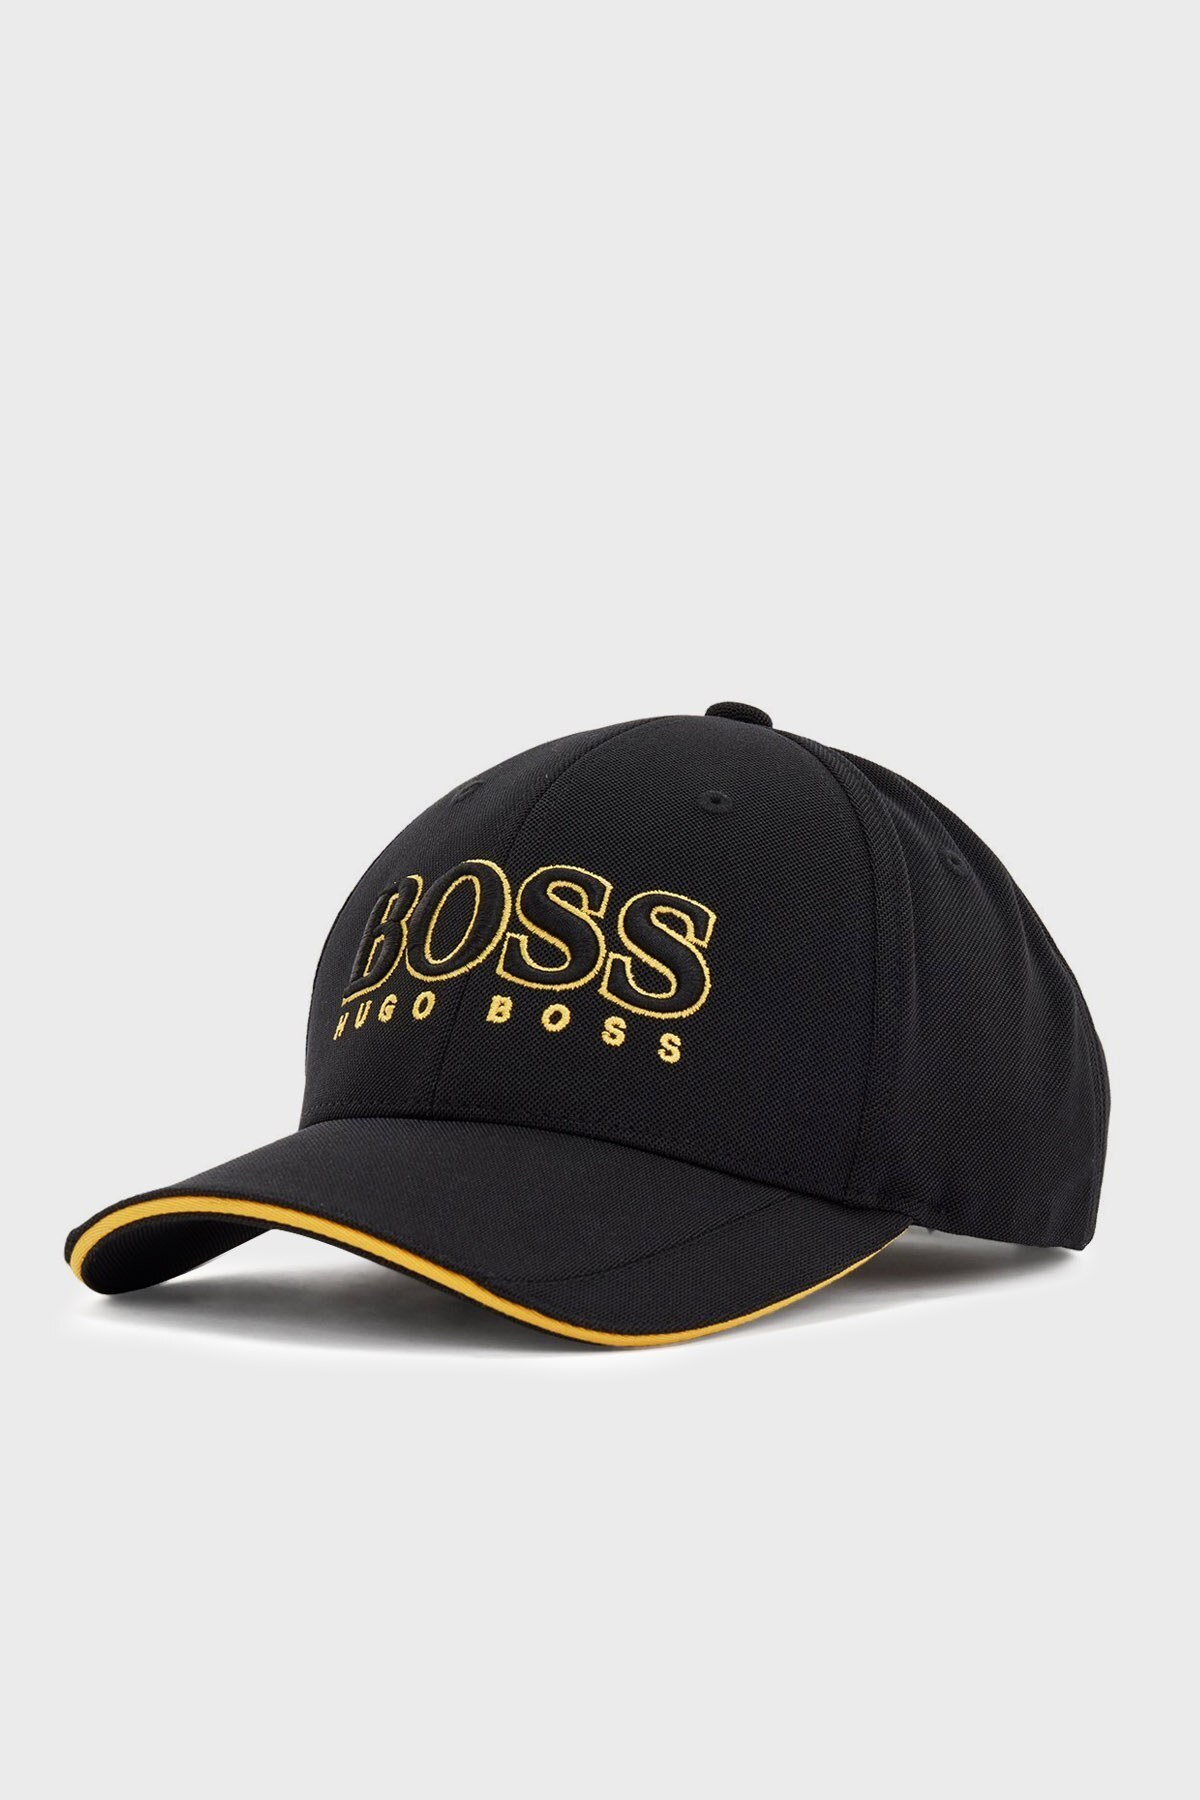 Boss Logo Detaylı Erkek Şapka 50443581 001 SİYAH